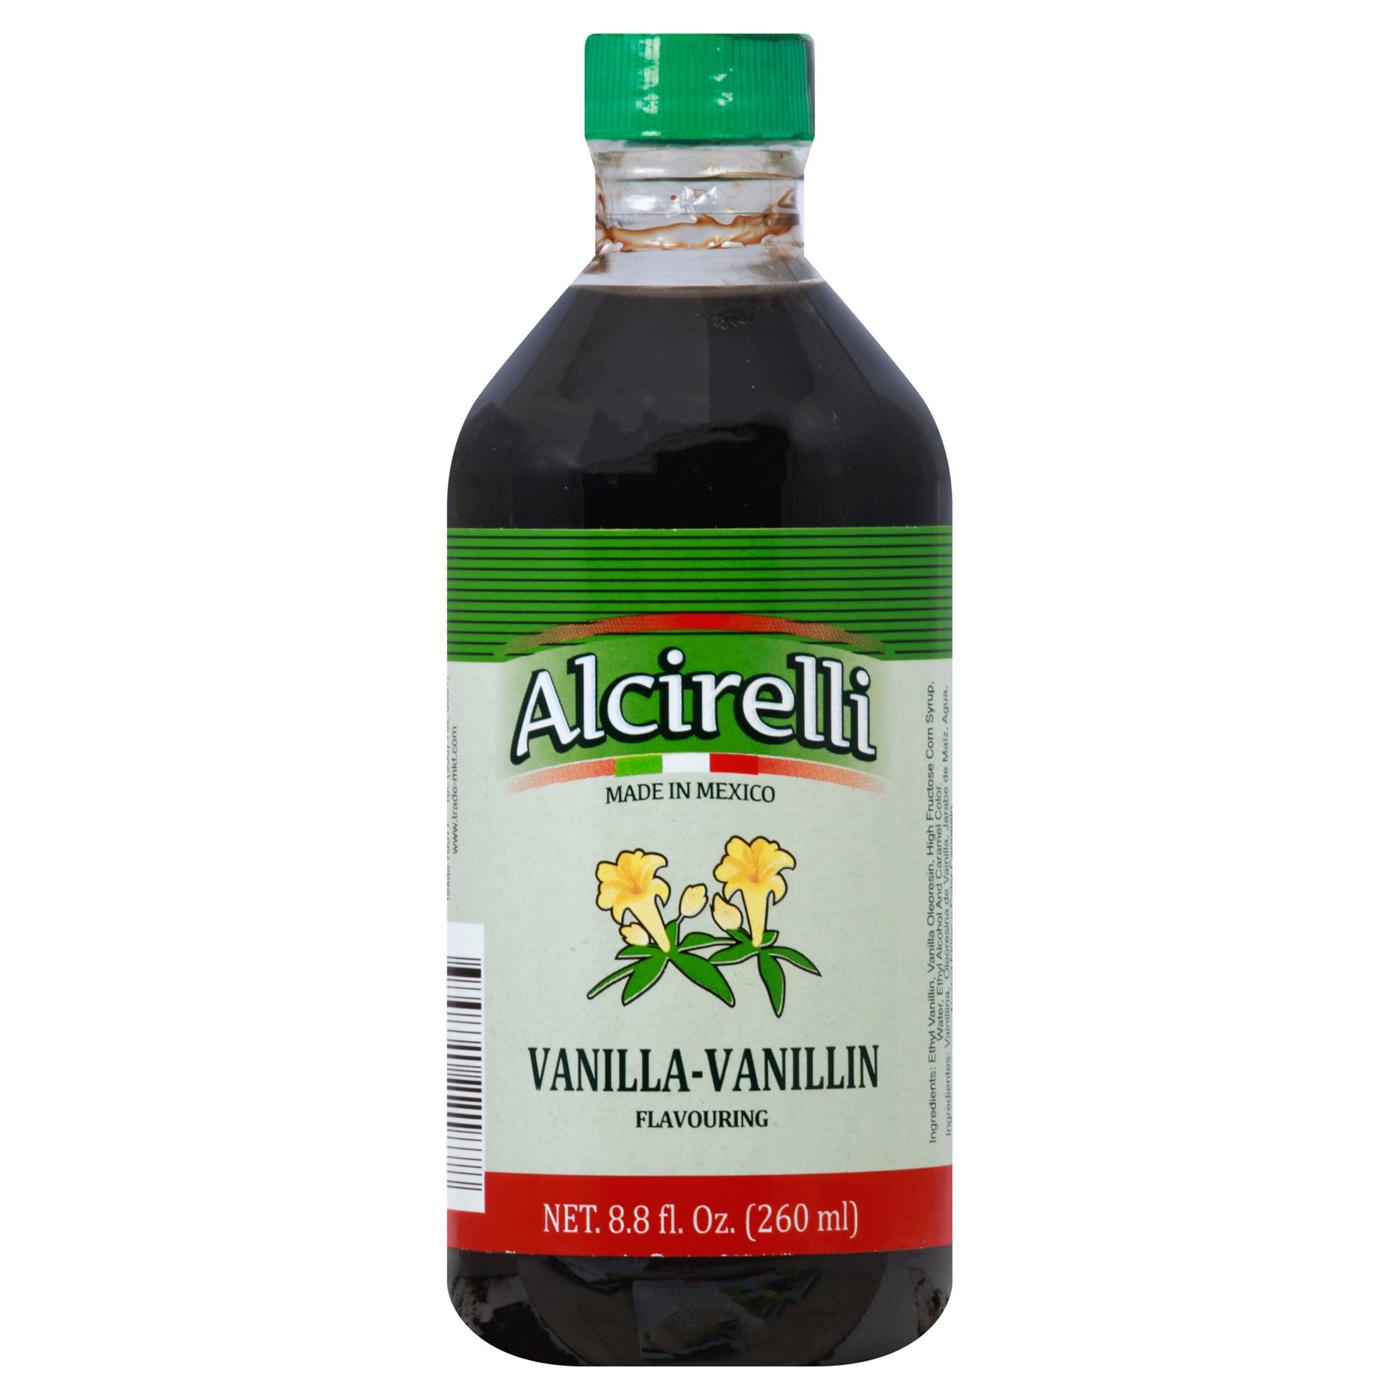 Alcirelli Pure Vanilla Extract; image 1 of 2